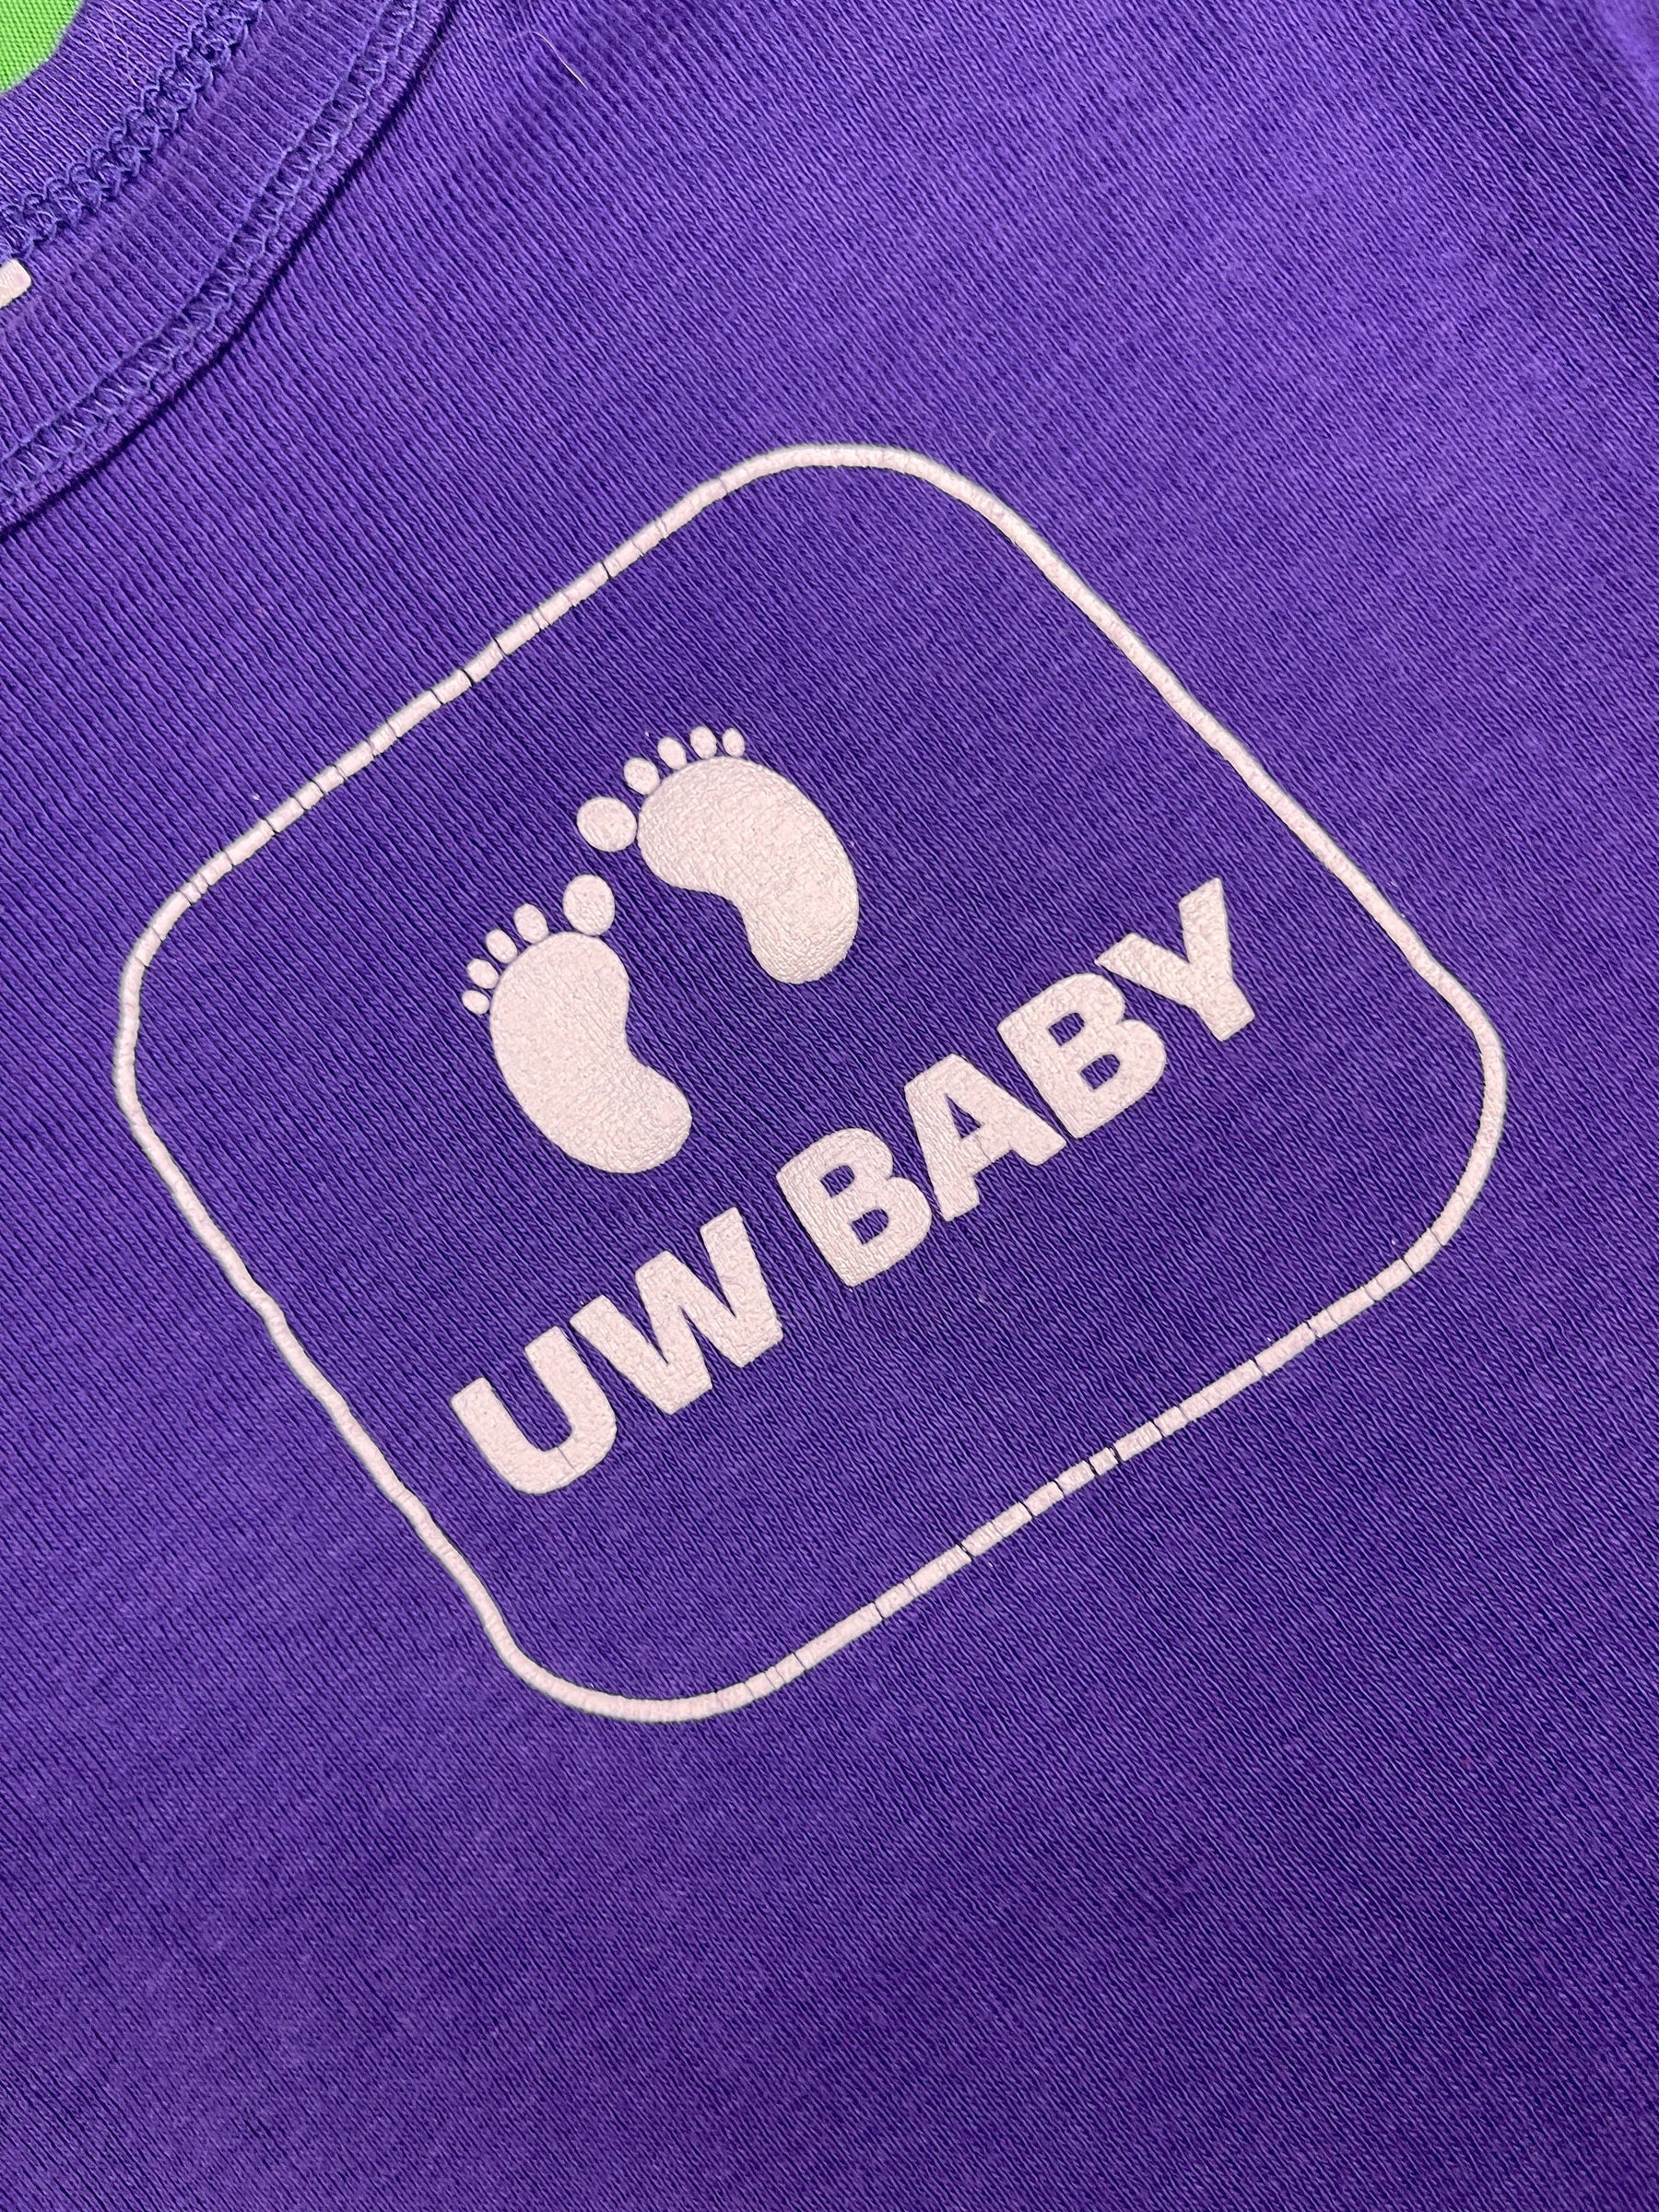 NCAA Washington Huskies "UW Baby" Infant Bodysuit/Vest 6 Months